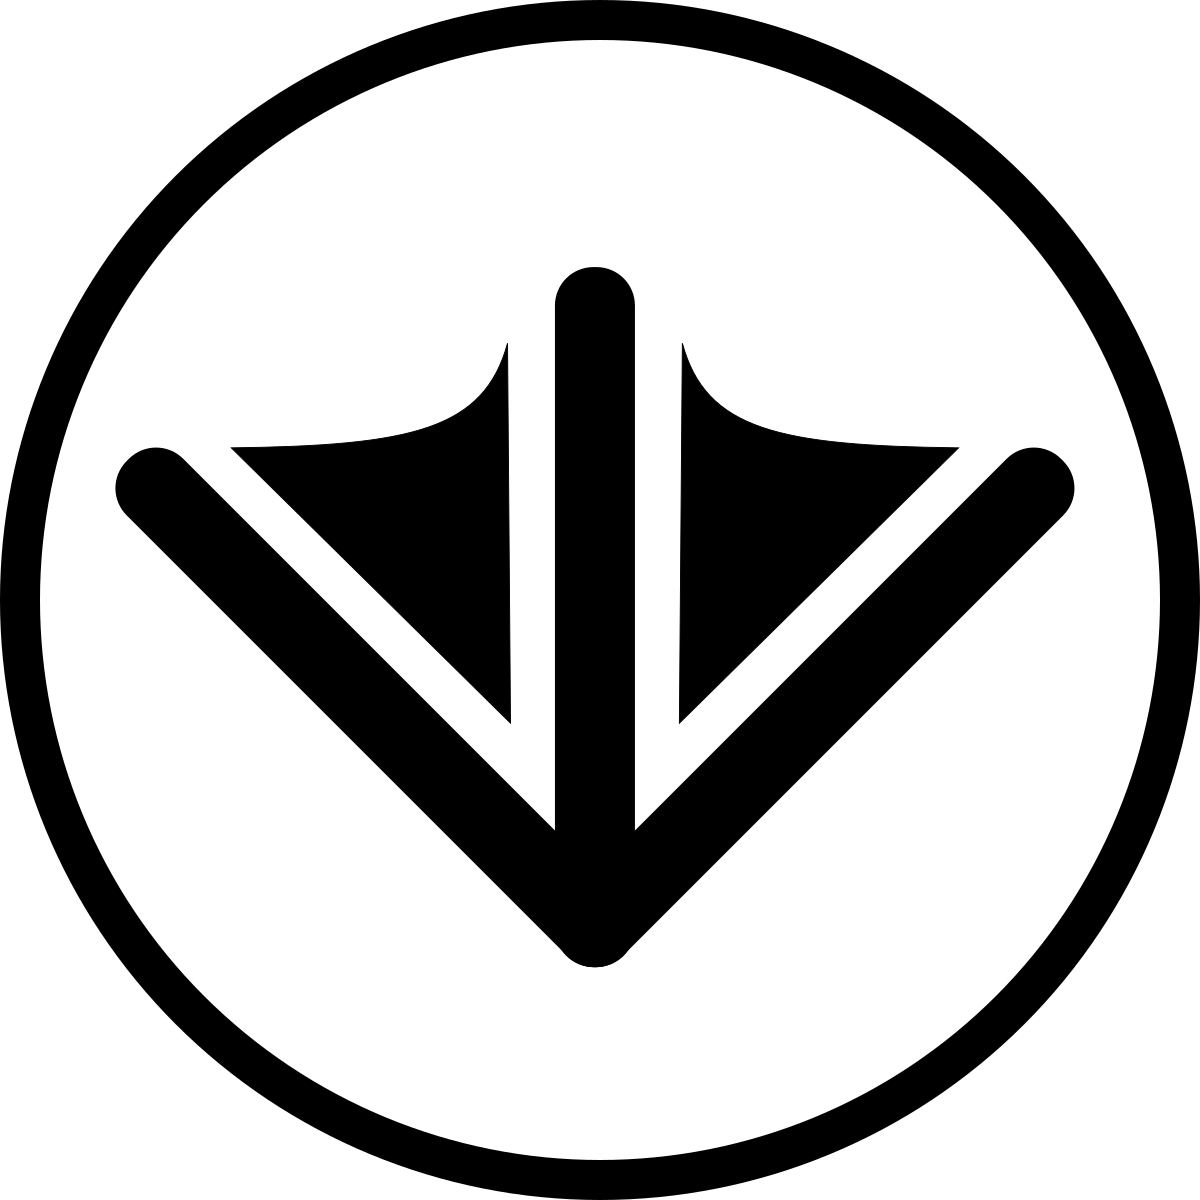 FlyQuackSwim logo:  a black and white, stylized, duck foot